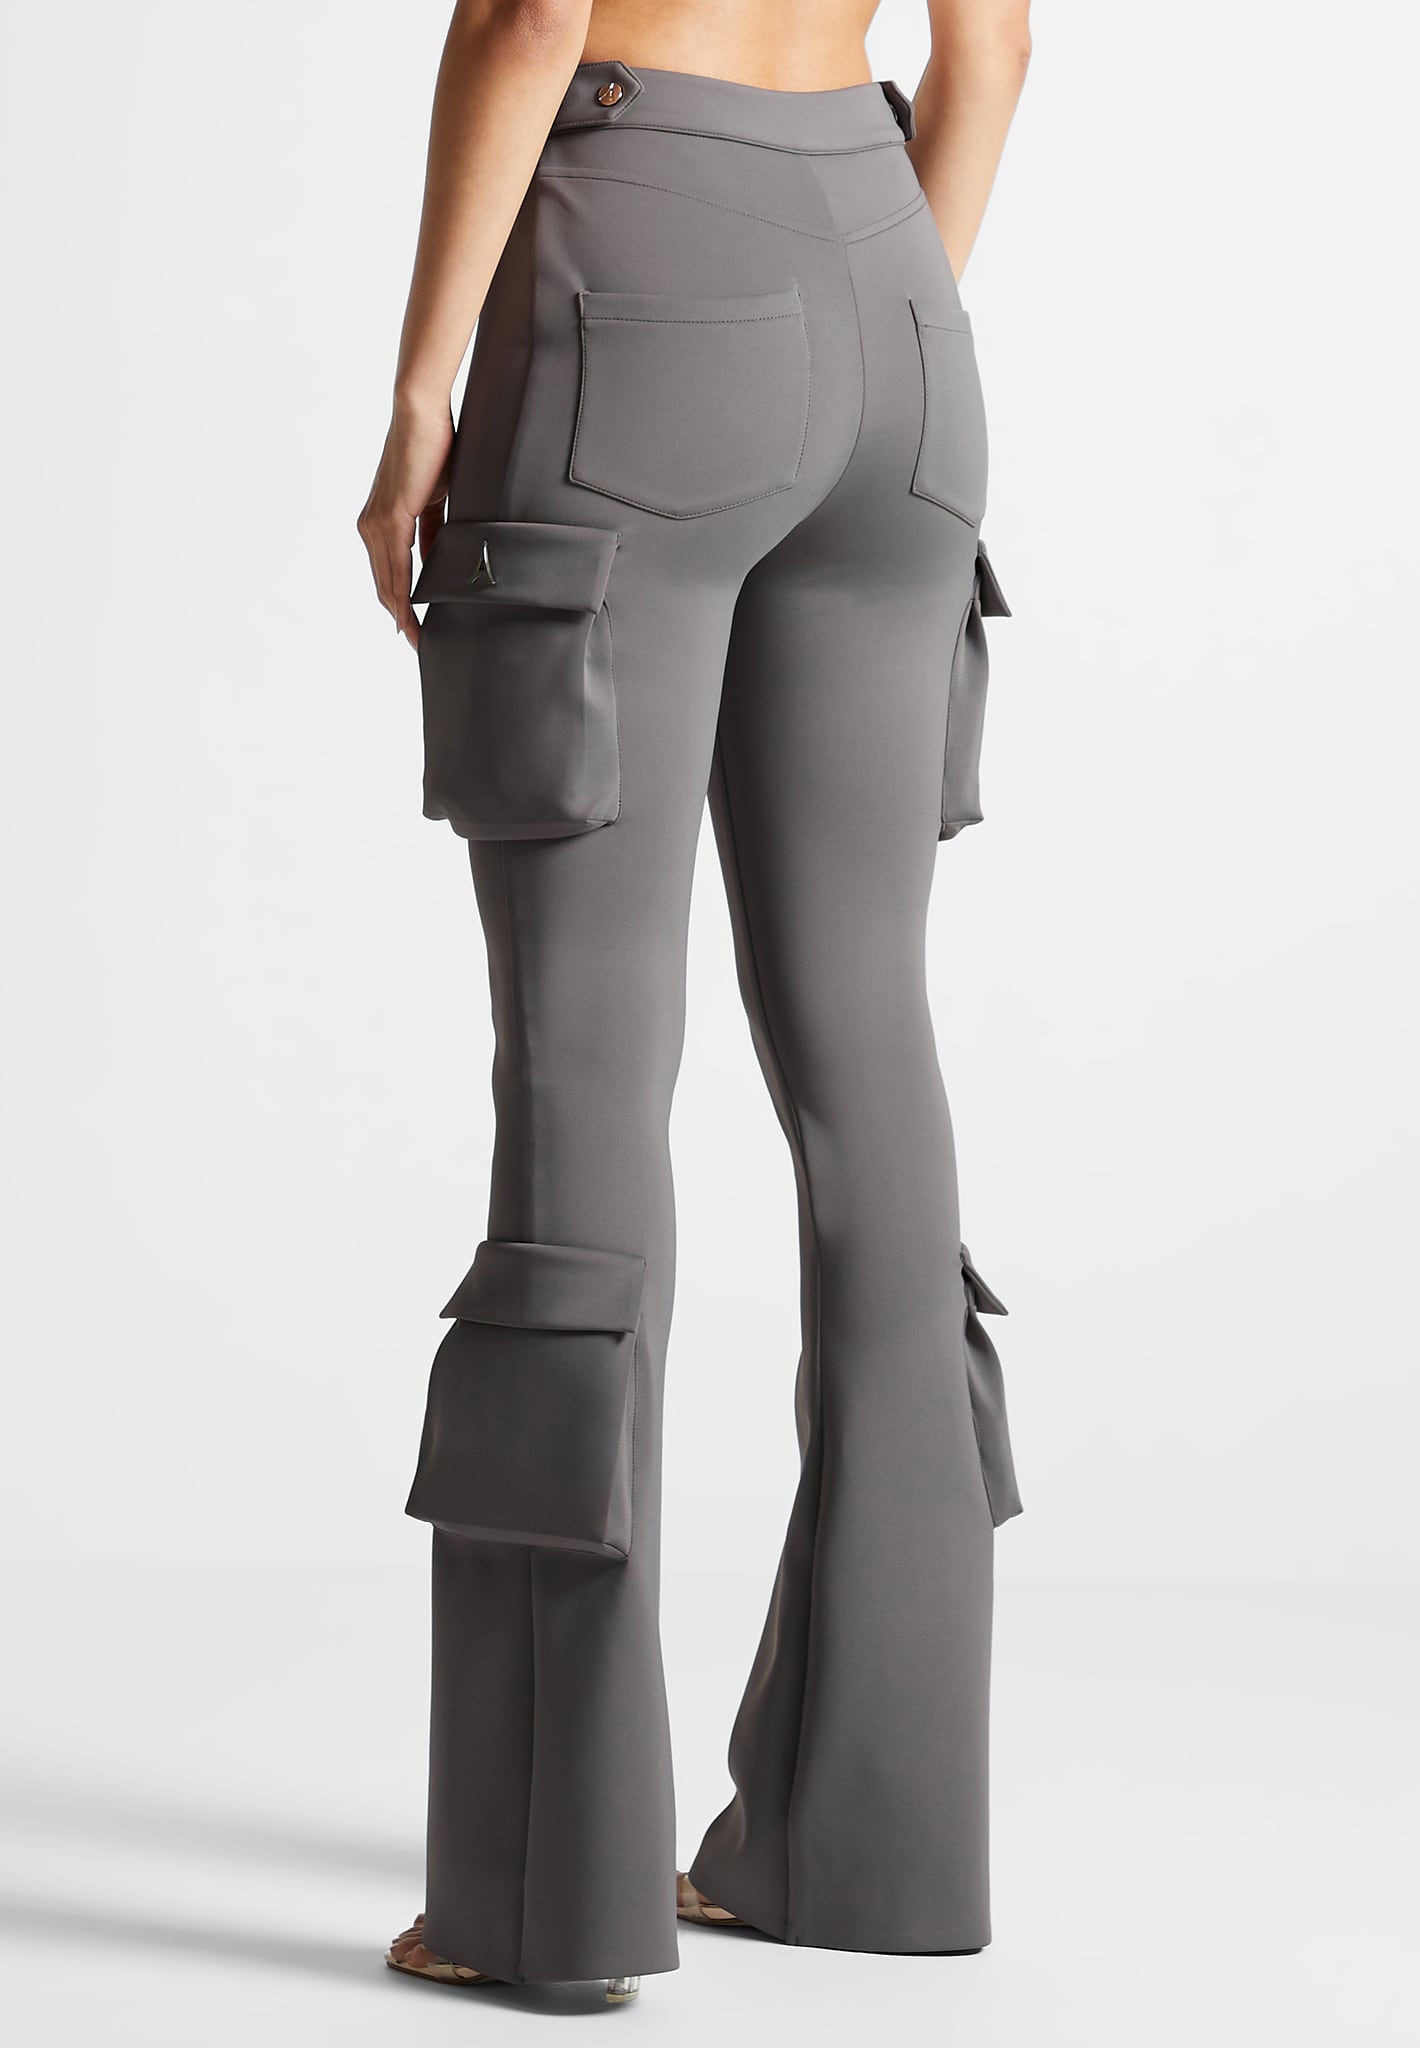 neoprene-cargo-fit-and-flare-leggings-grey